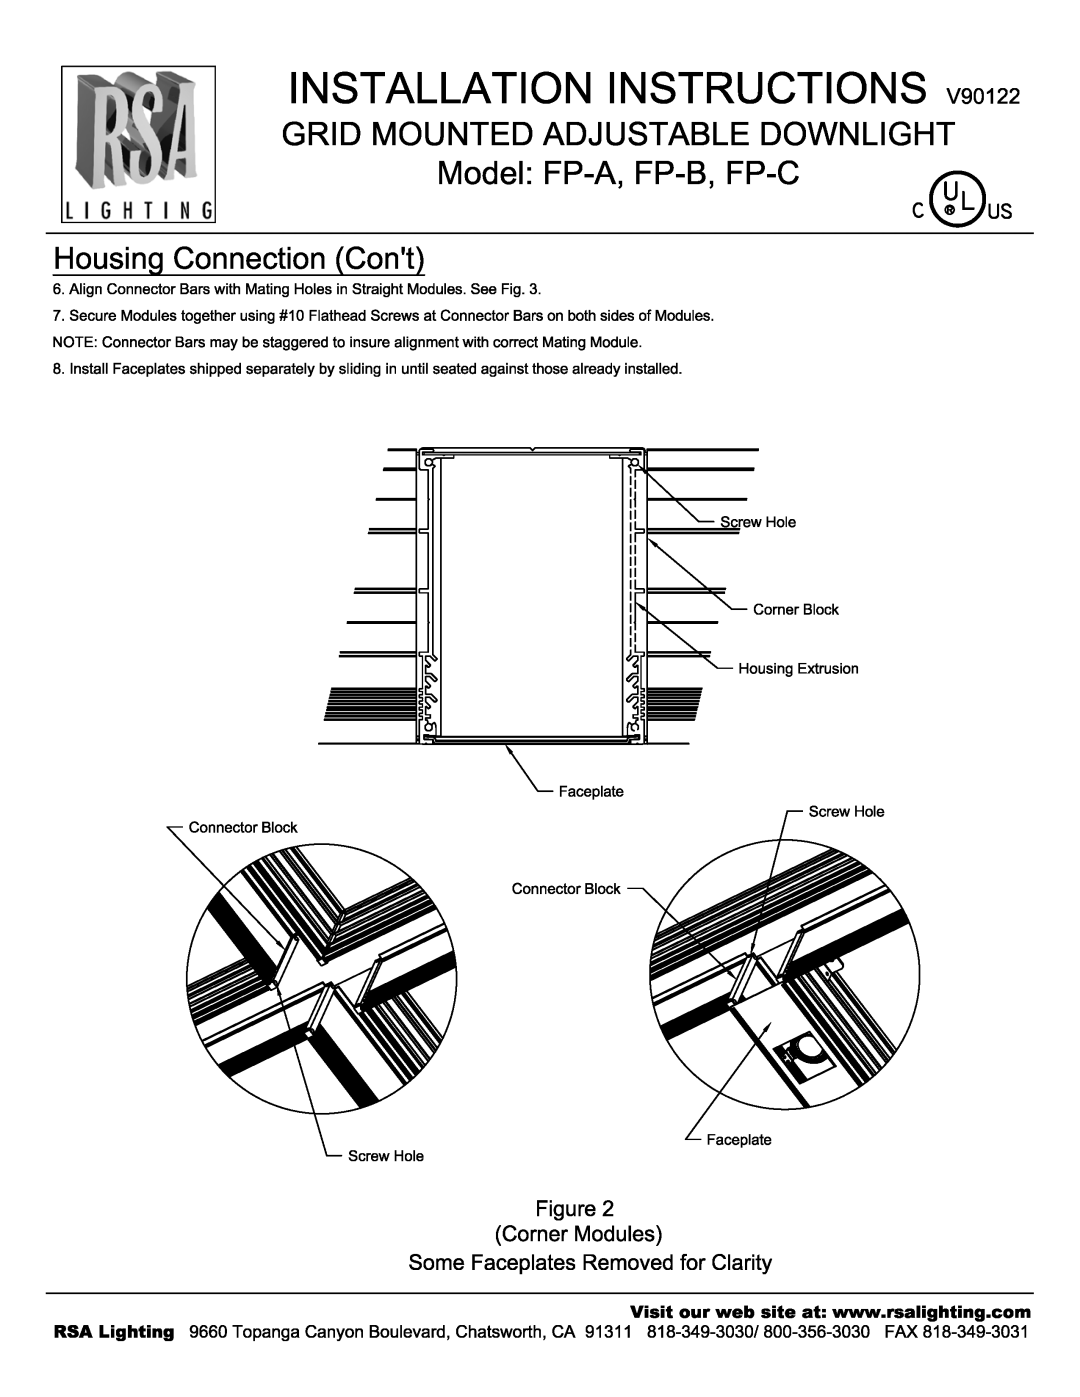 Cooper Lighting FP-A, FP-C, FP-B manual 